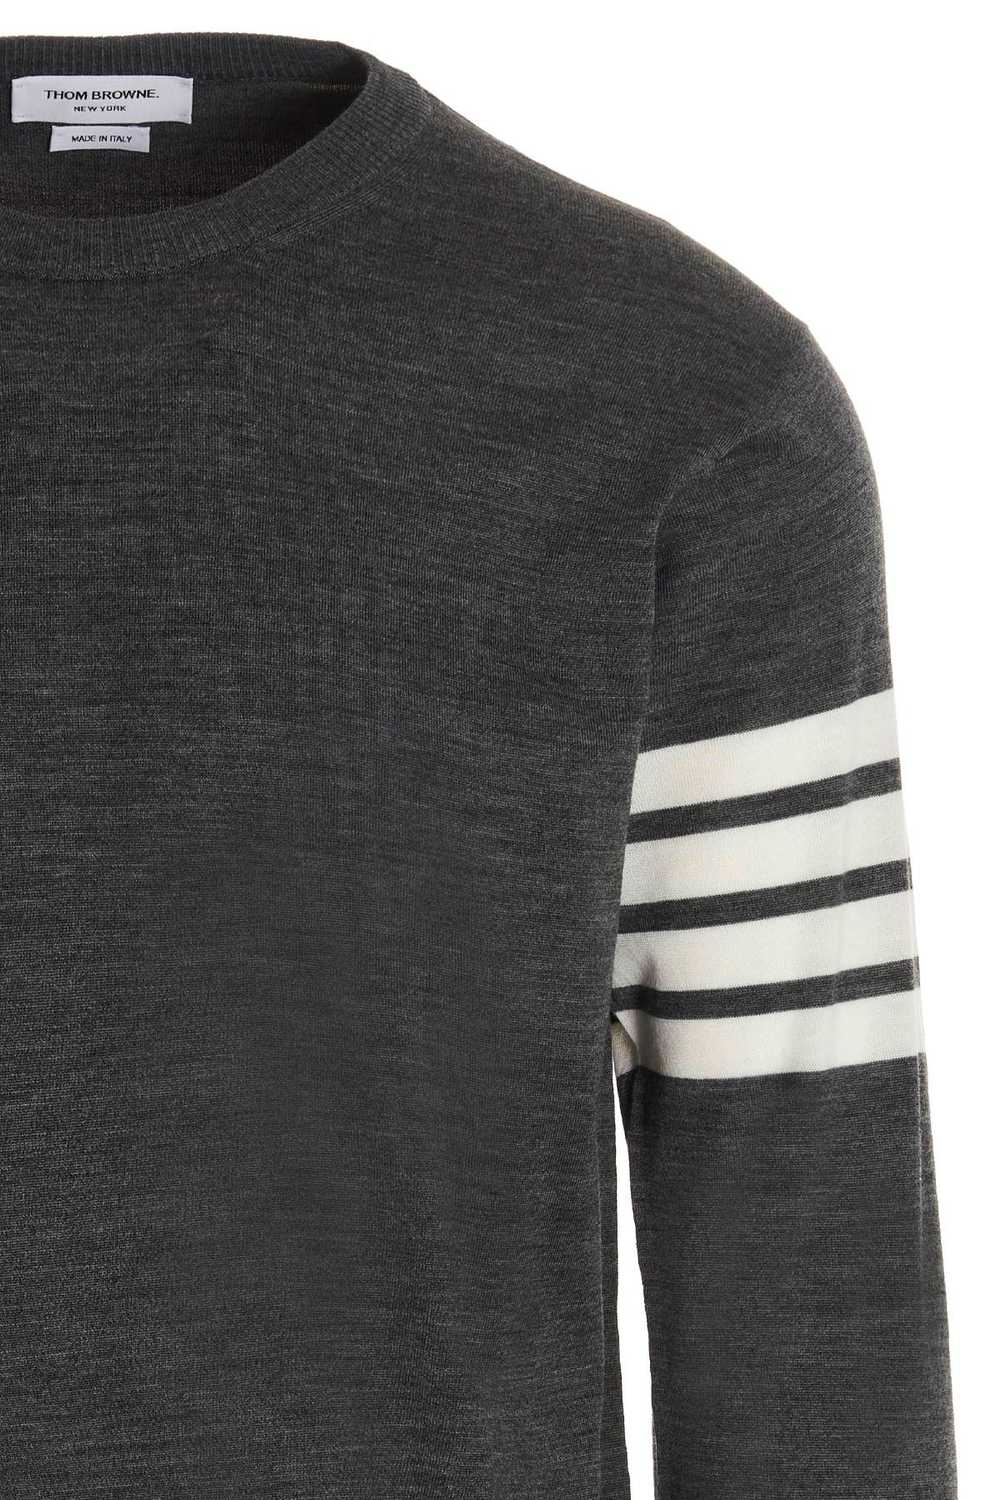 Thom Browne '4 bar' sweater - image 3